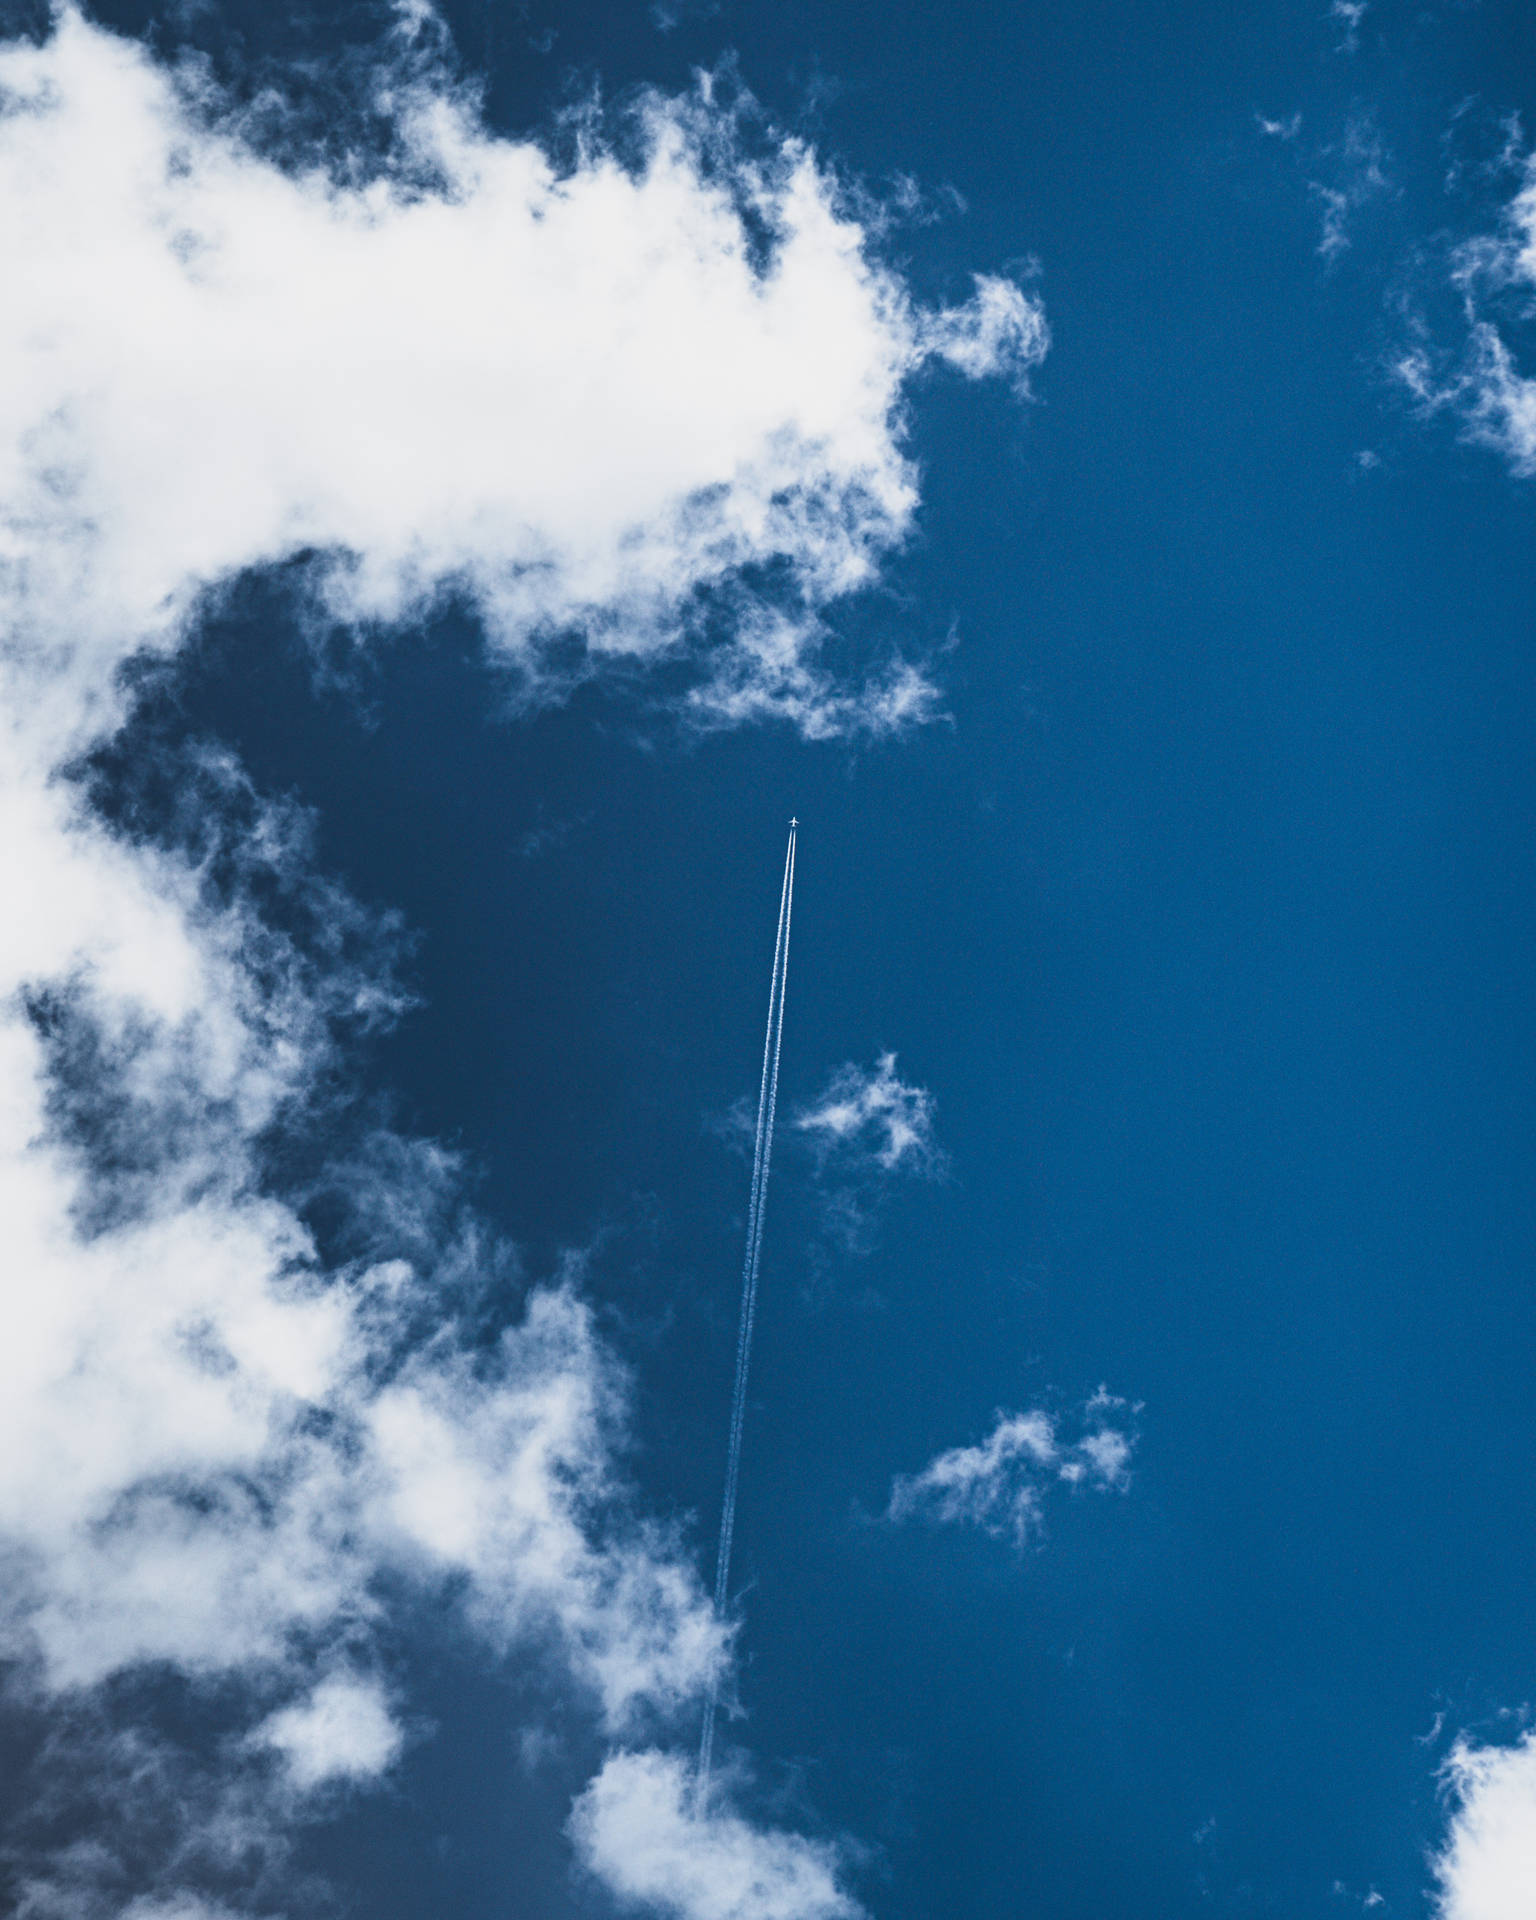 Azure Sky With Jet